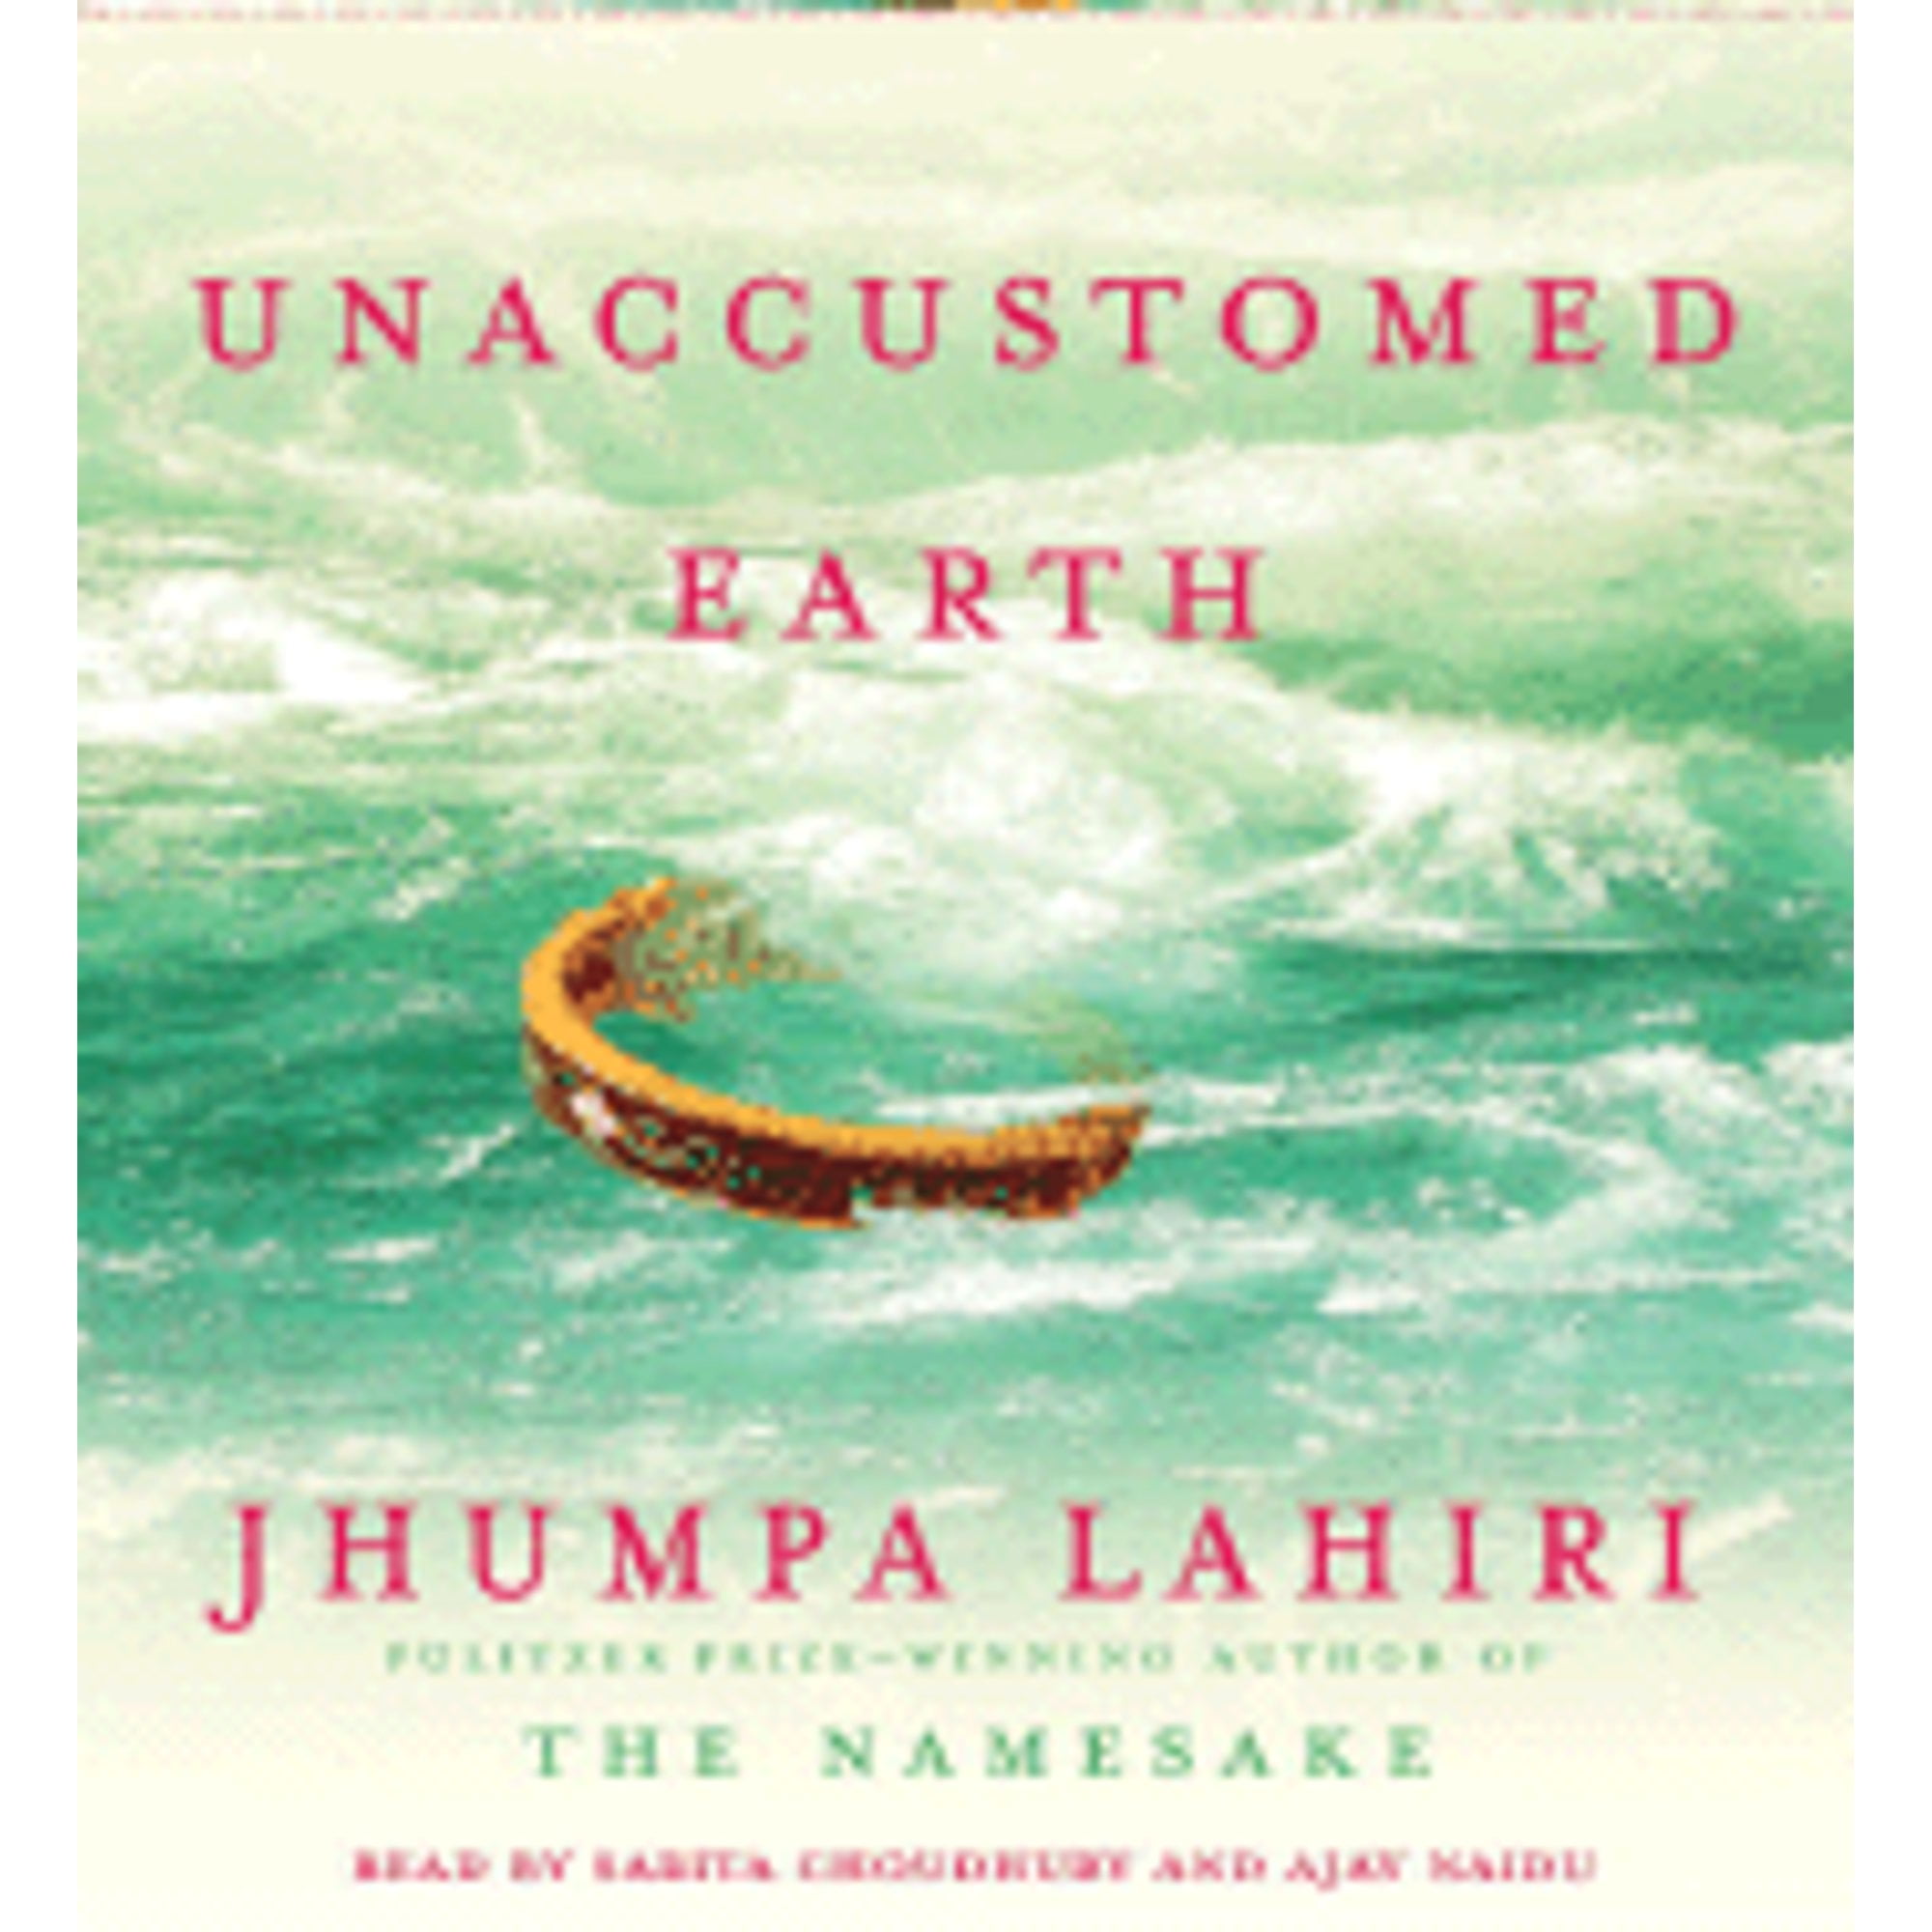 Pre-Owned Unaccustomed Earth (Audiobook 9780739341797) by Jhumpa Lahiri, Sarita Choudhury, Ajay Naidu